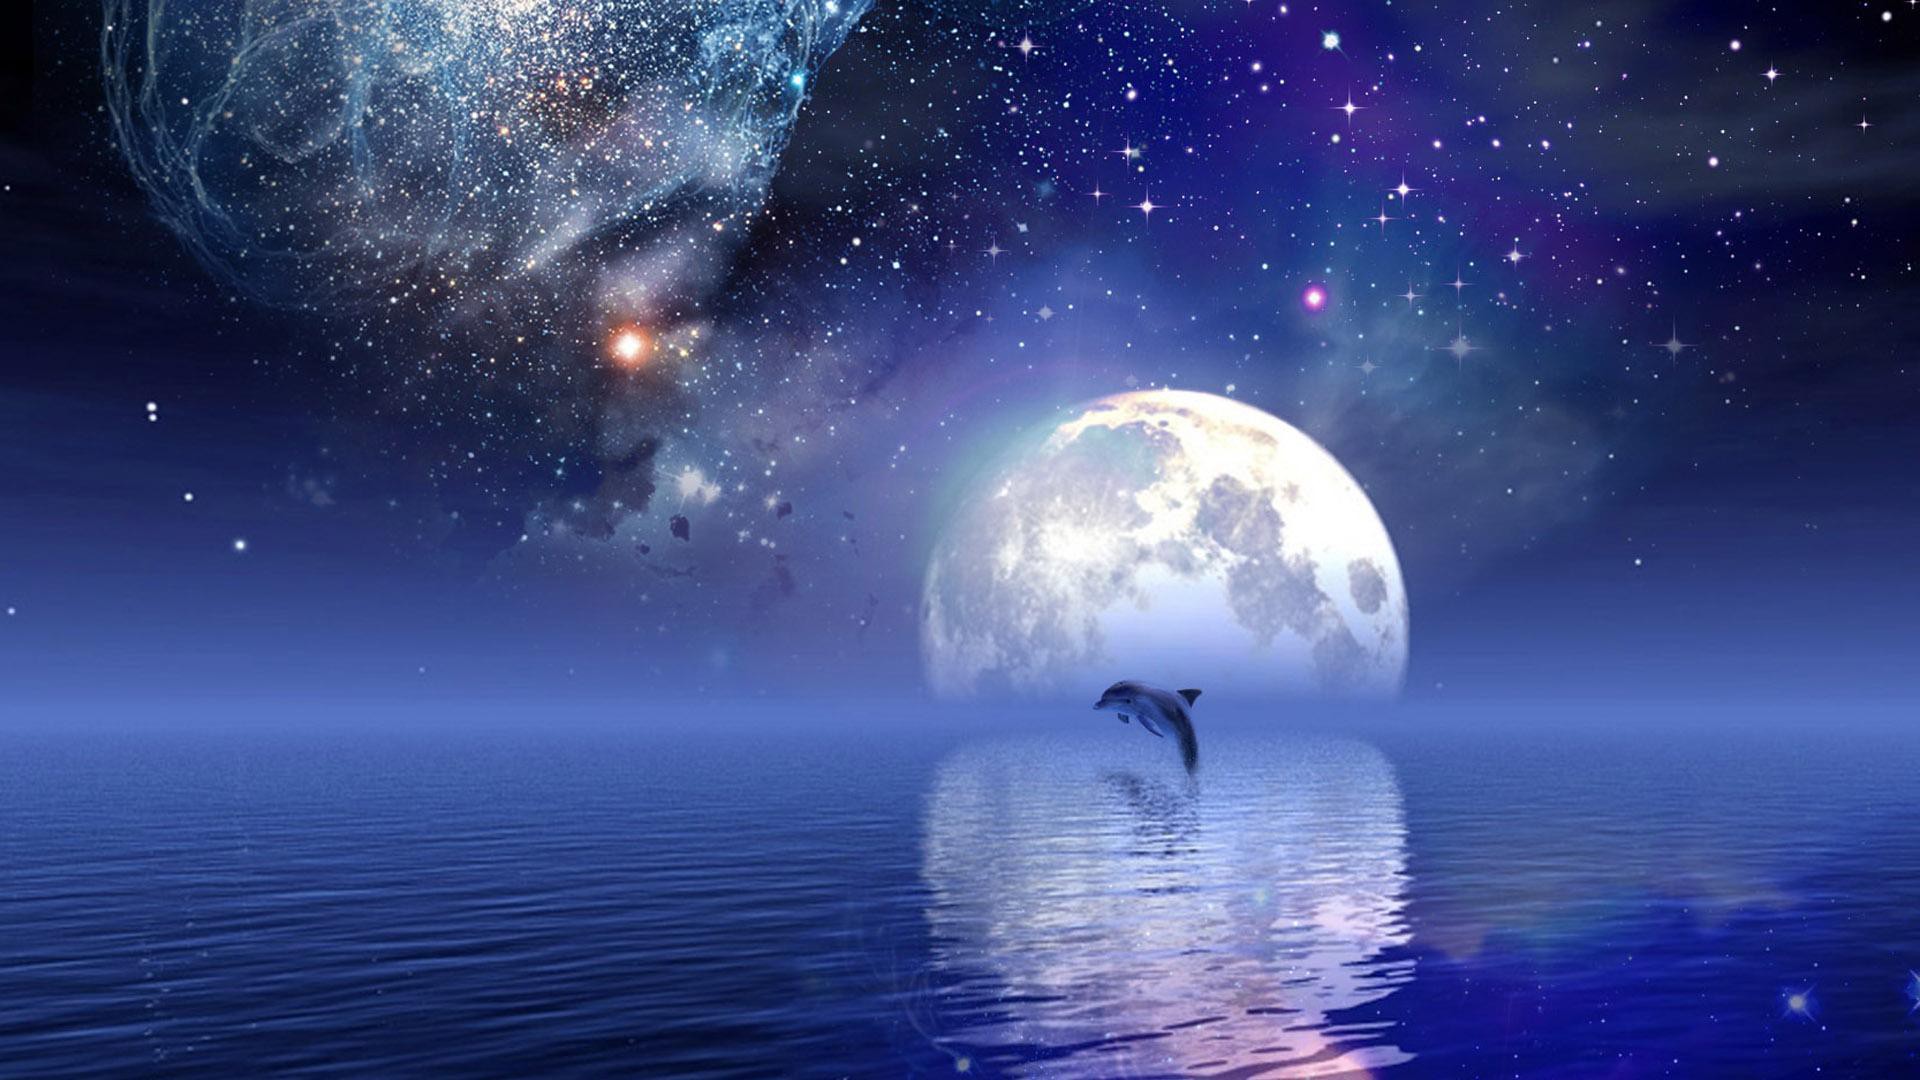 HD Dolphins Star Puter Desktop Wallpaper Image